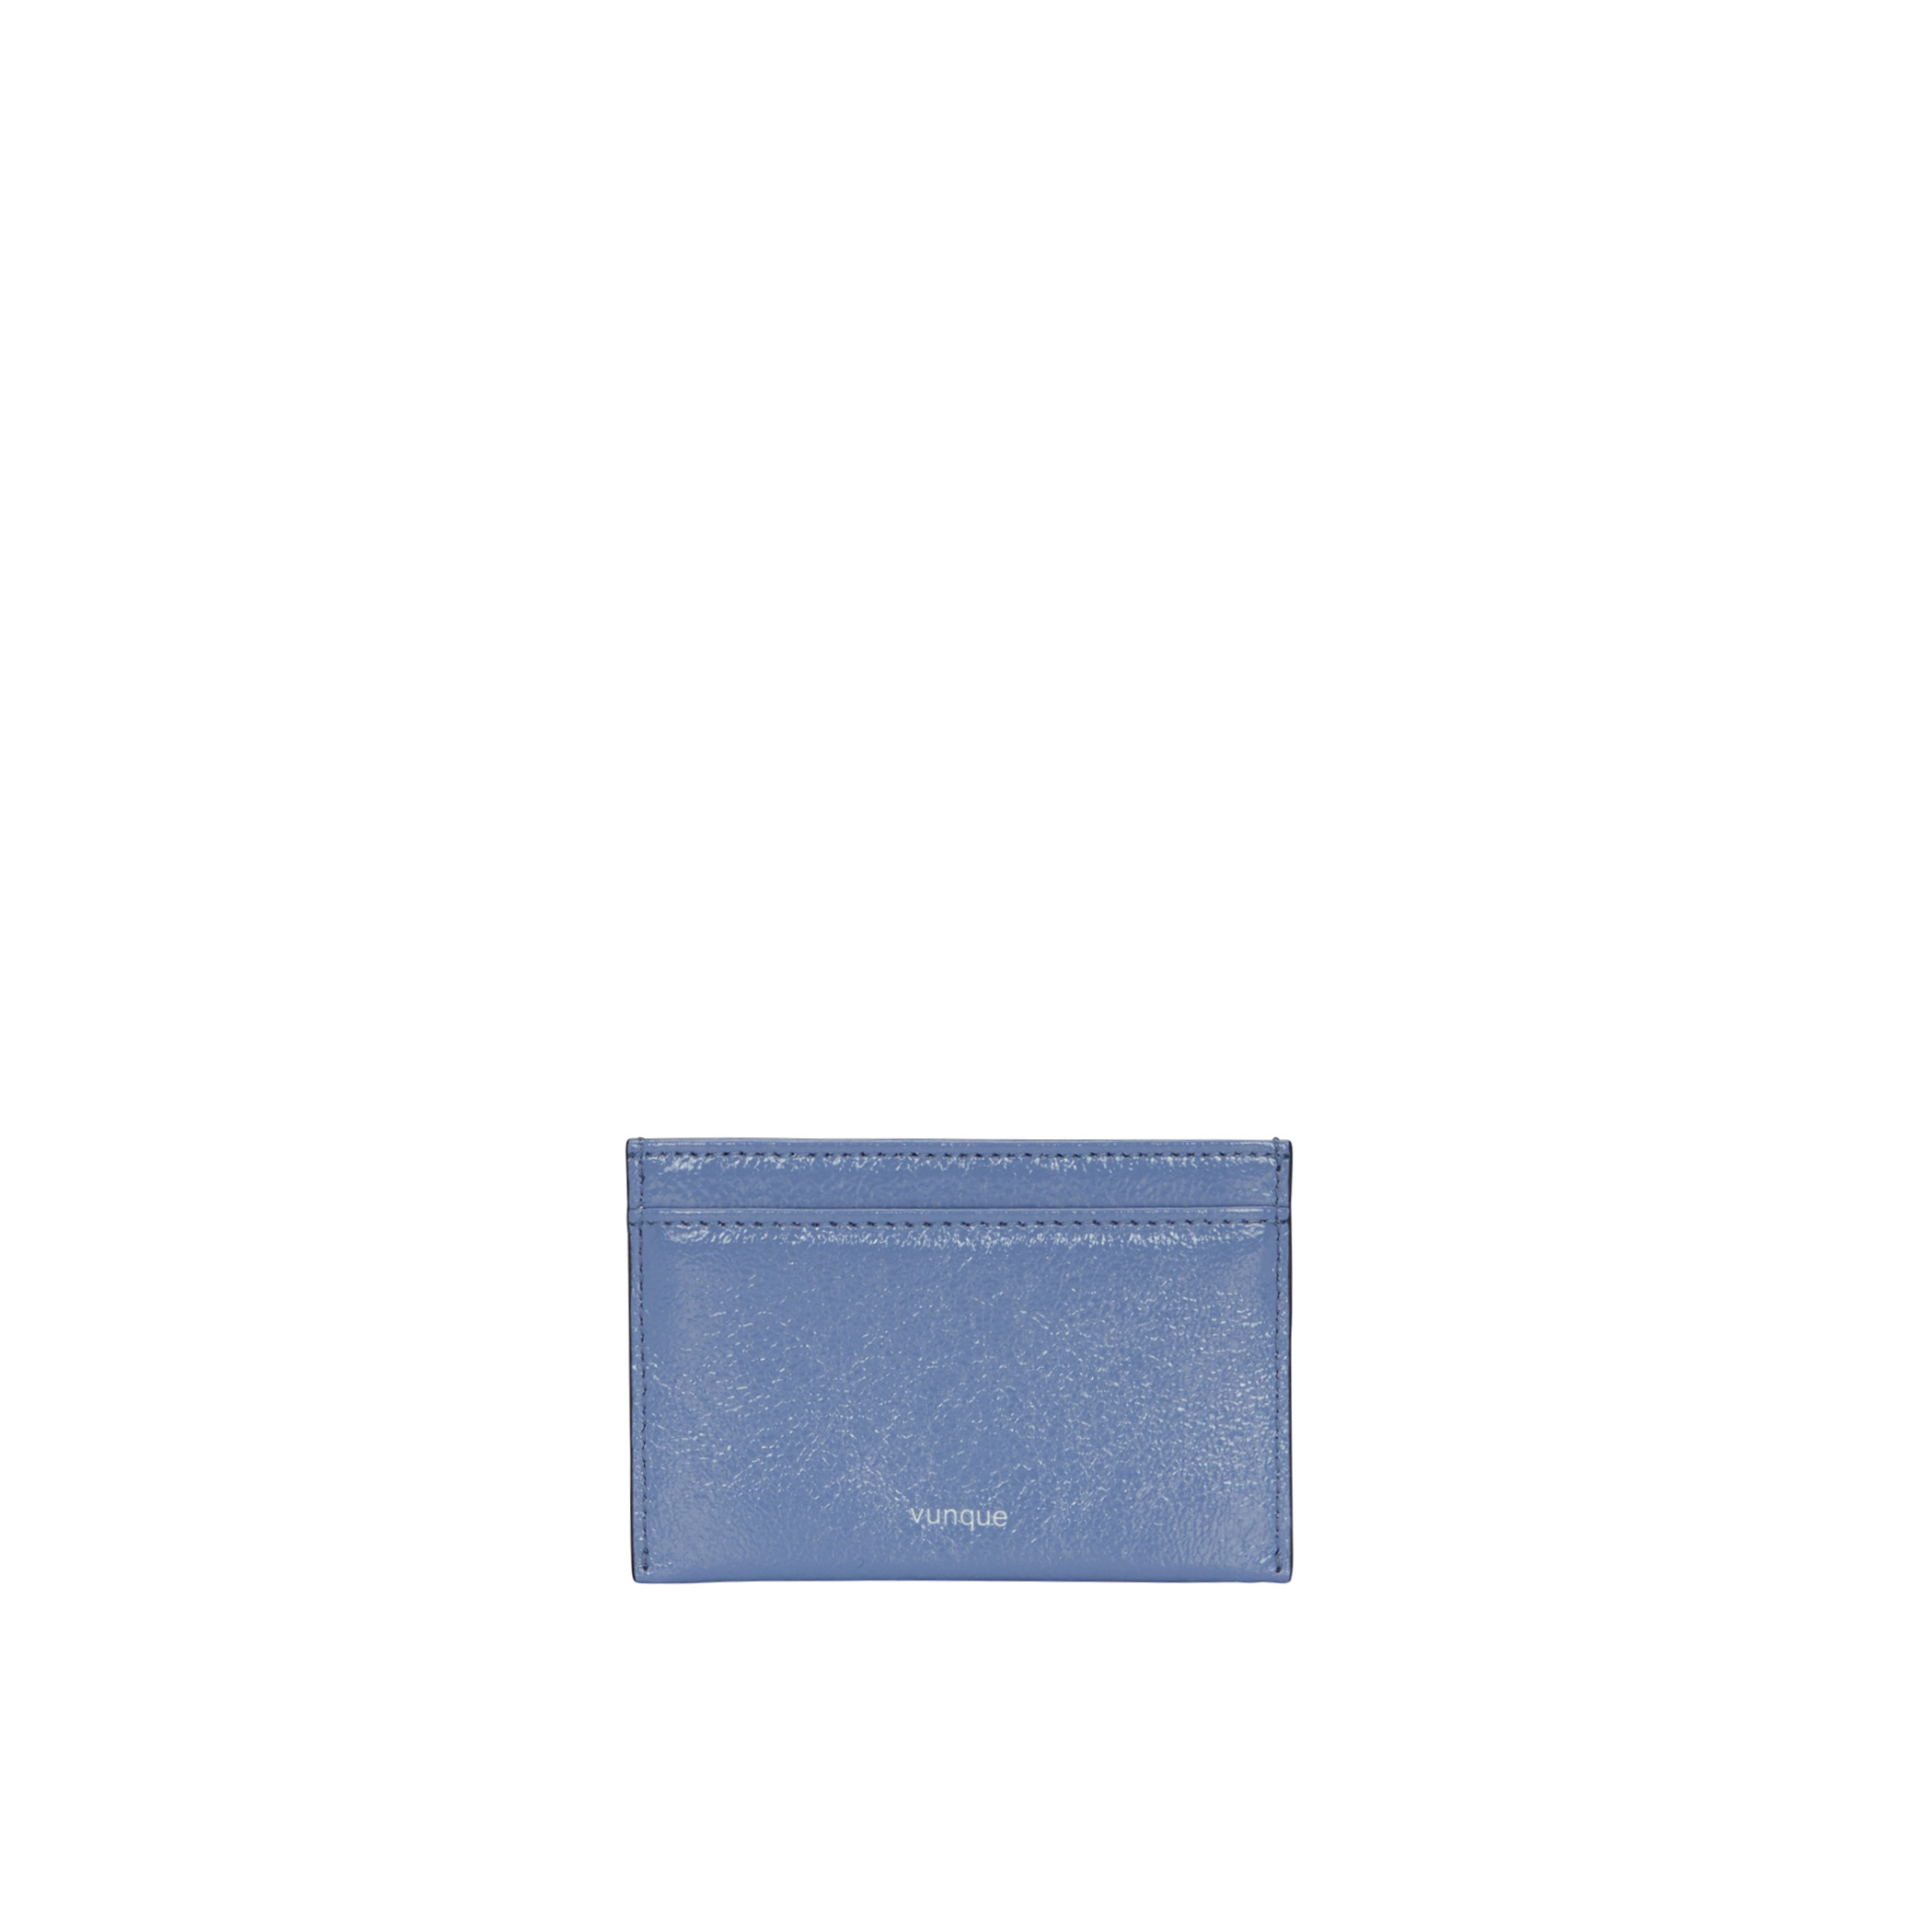 Occam Lune Card Wallet (오캄 룬 카드지갑) Iris Blue